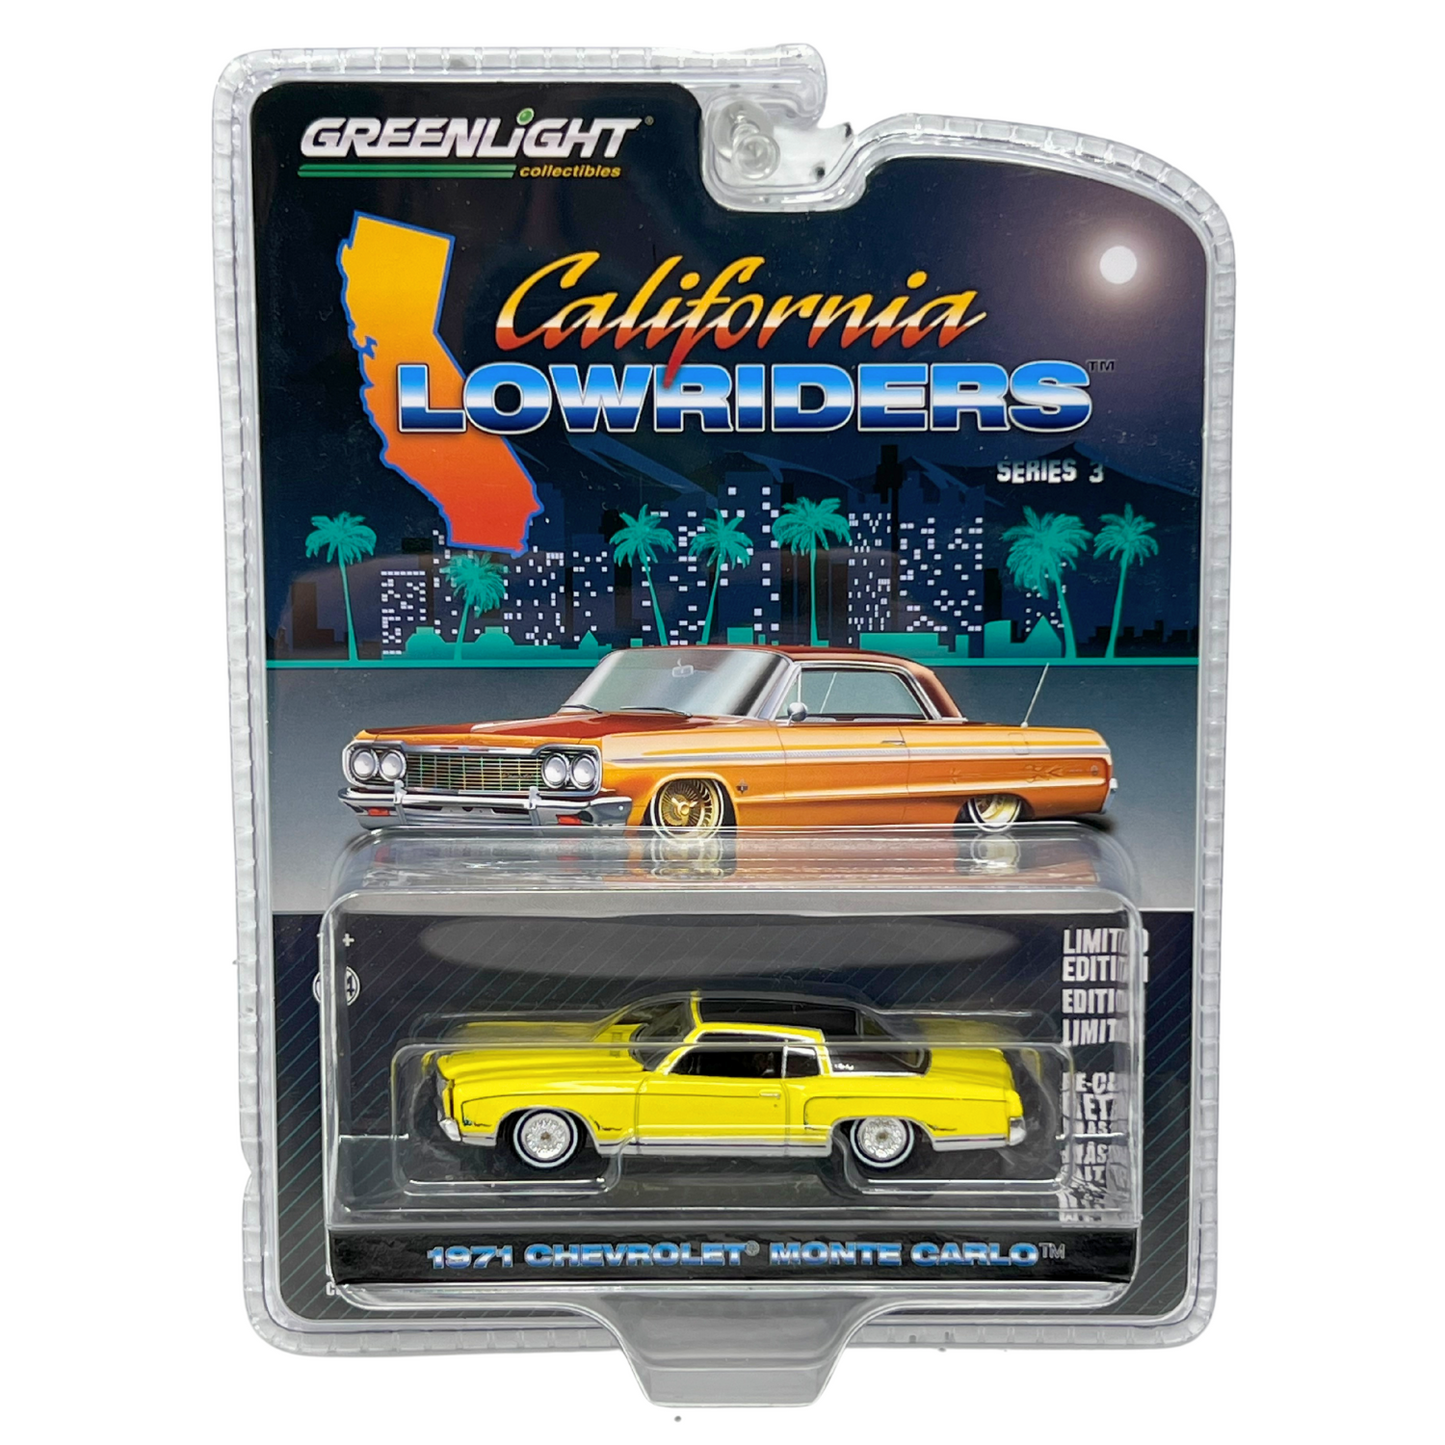 Greenlight California Lowriders 1971 Chevrolet Monte Carlo 1:64 Diecast